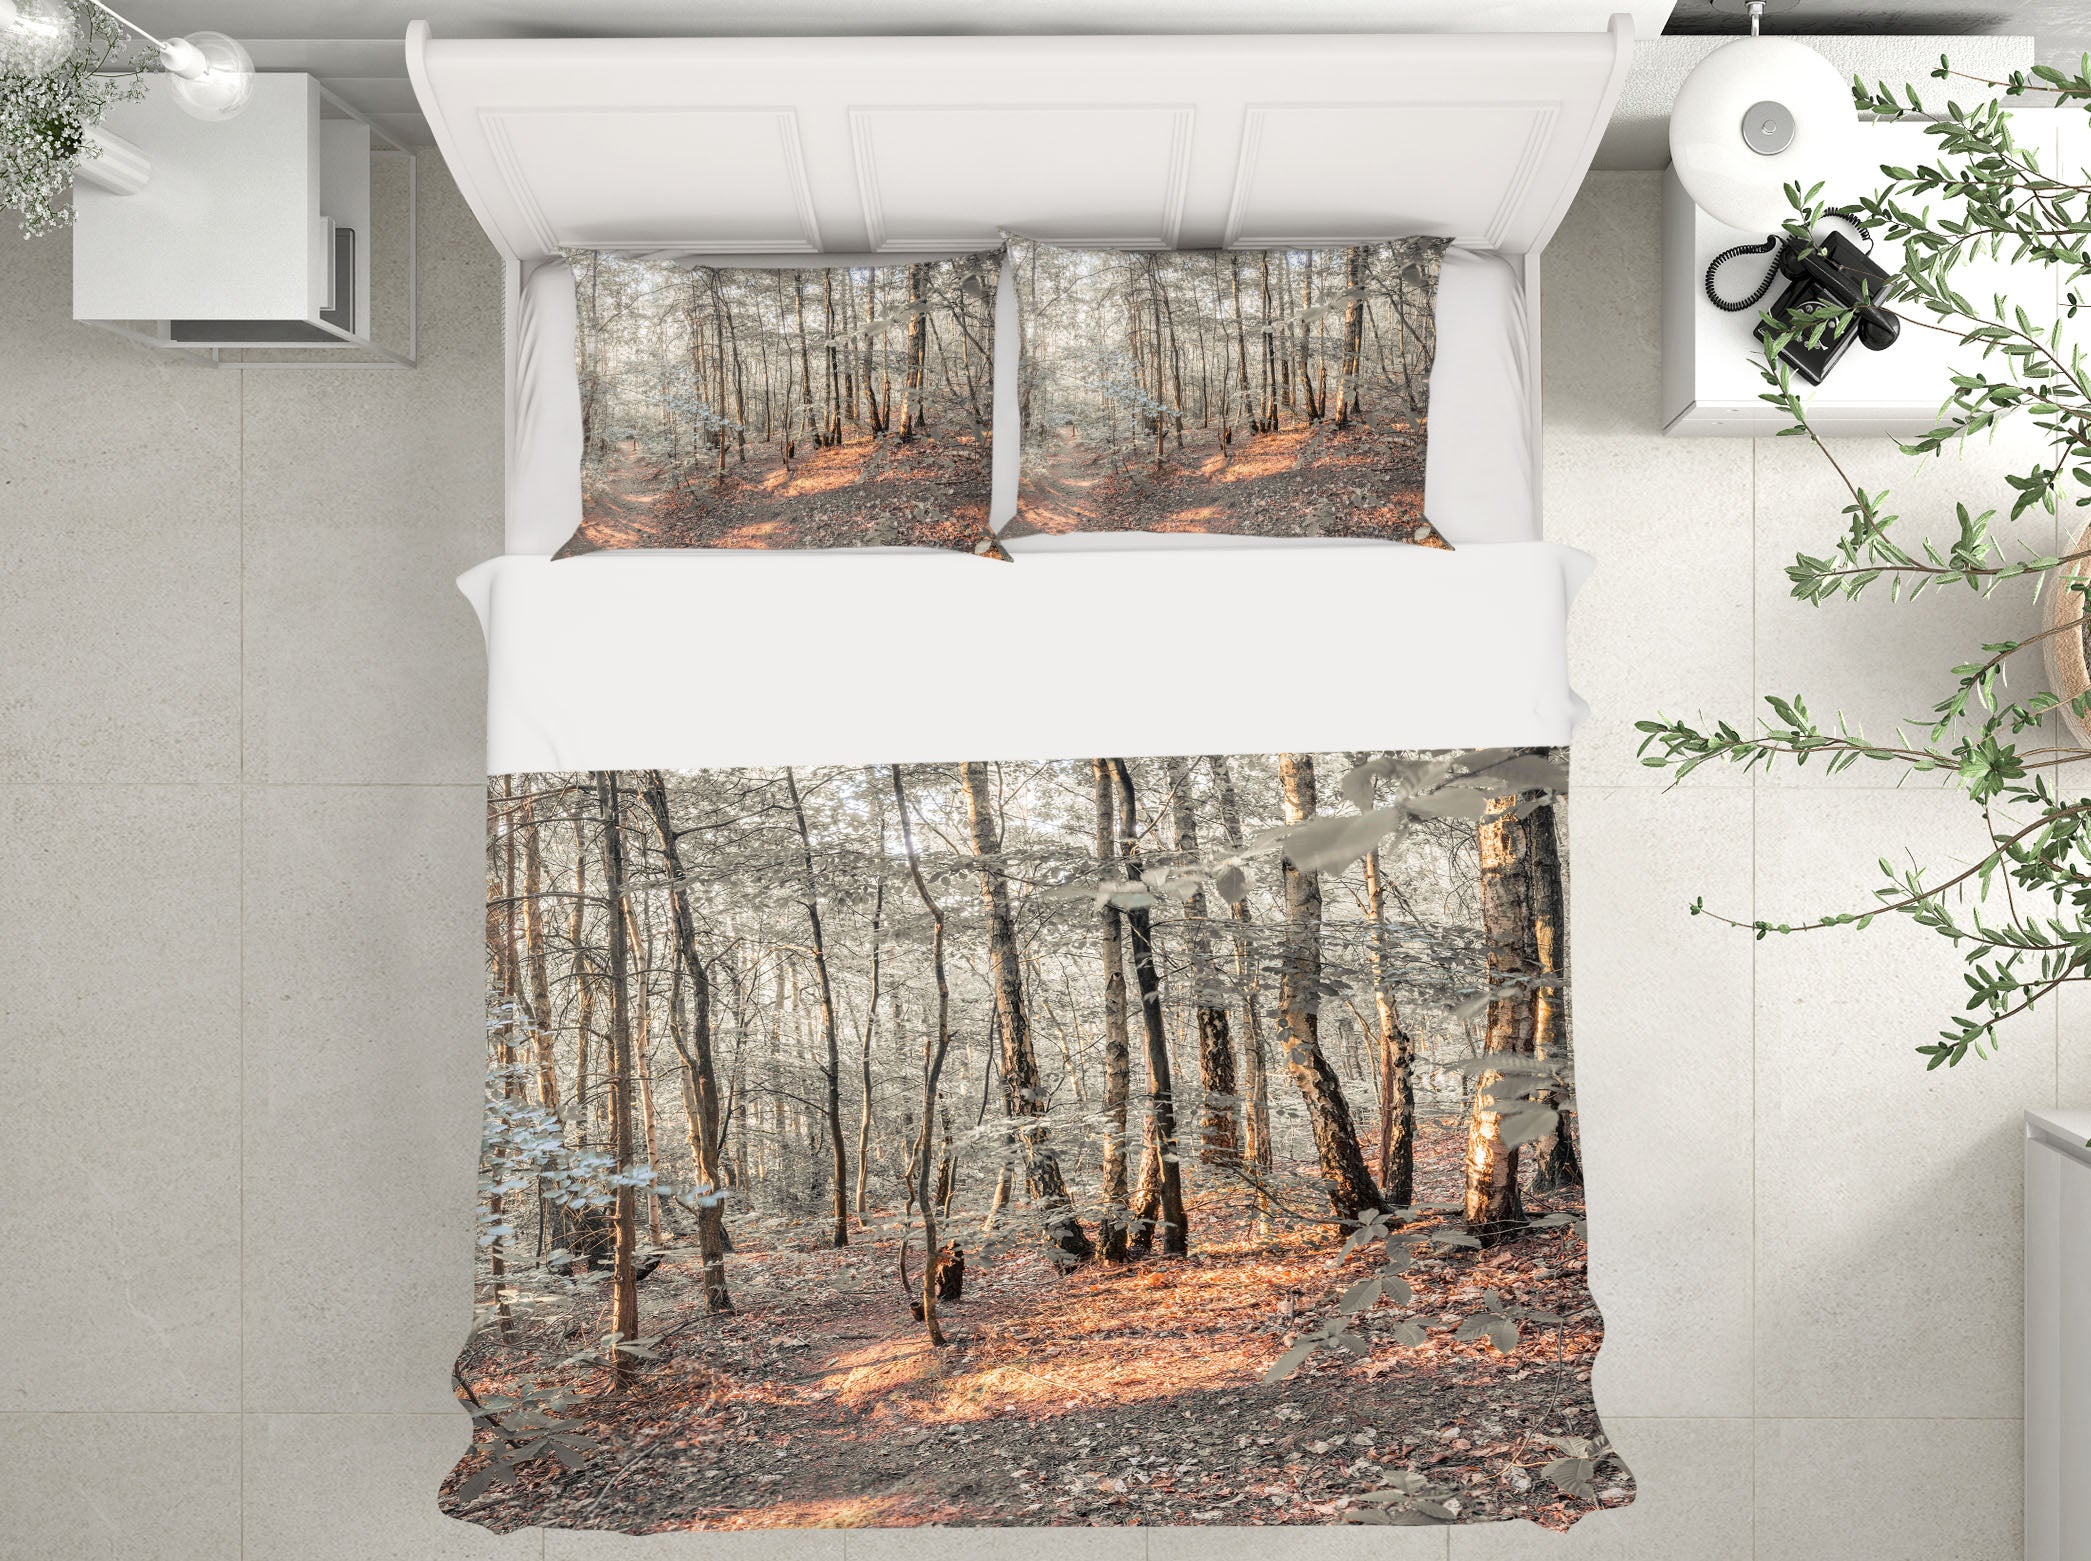 3D Forest Trees 7149 Assaf Frank Bedding Bed Pillowcases Quilt Cover Duvet Cover